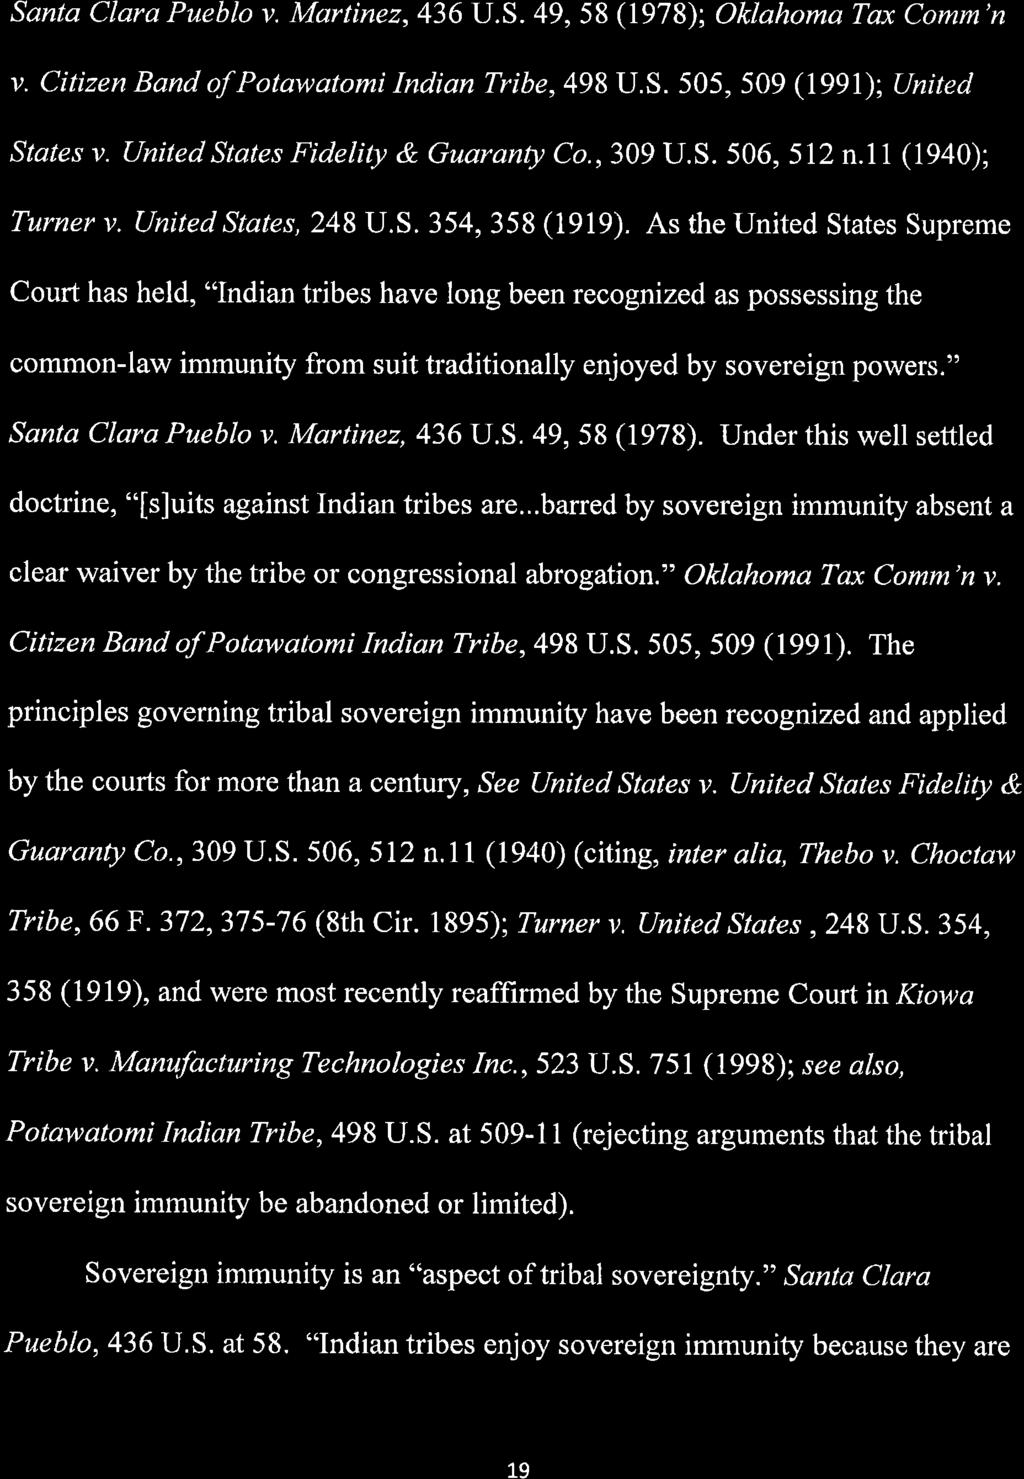 Santa Clara Pueblo v. Martinez, 436 U.S. 49, 58 (1978); Oklahoma Tax Comm'n v. Citizen Band of Potawatomi Indian Tribe, 498 U.S. 505, 509 (1991); United States v. United States Fidelity & Guaranty Co.